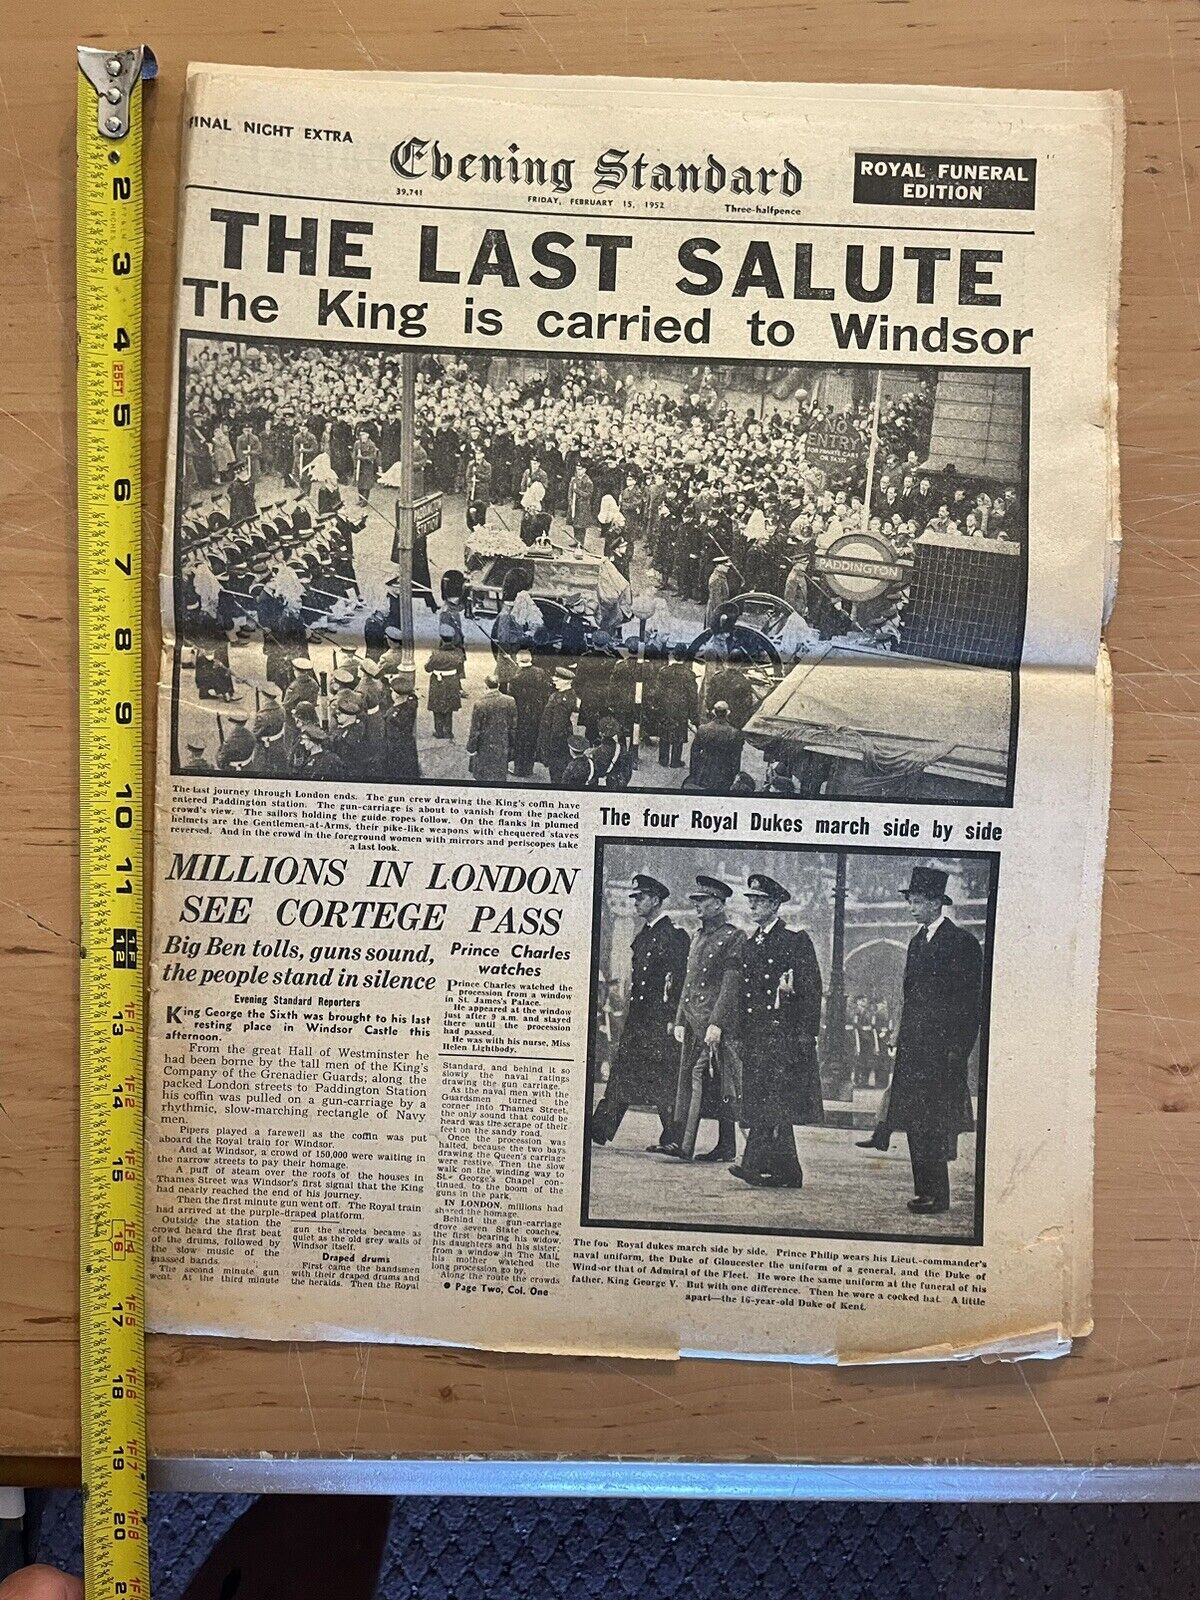 Vintage Newspaper -Evening Standard - February 15, 1952, Funeral King George VI